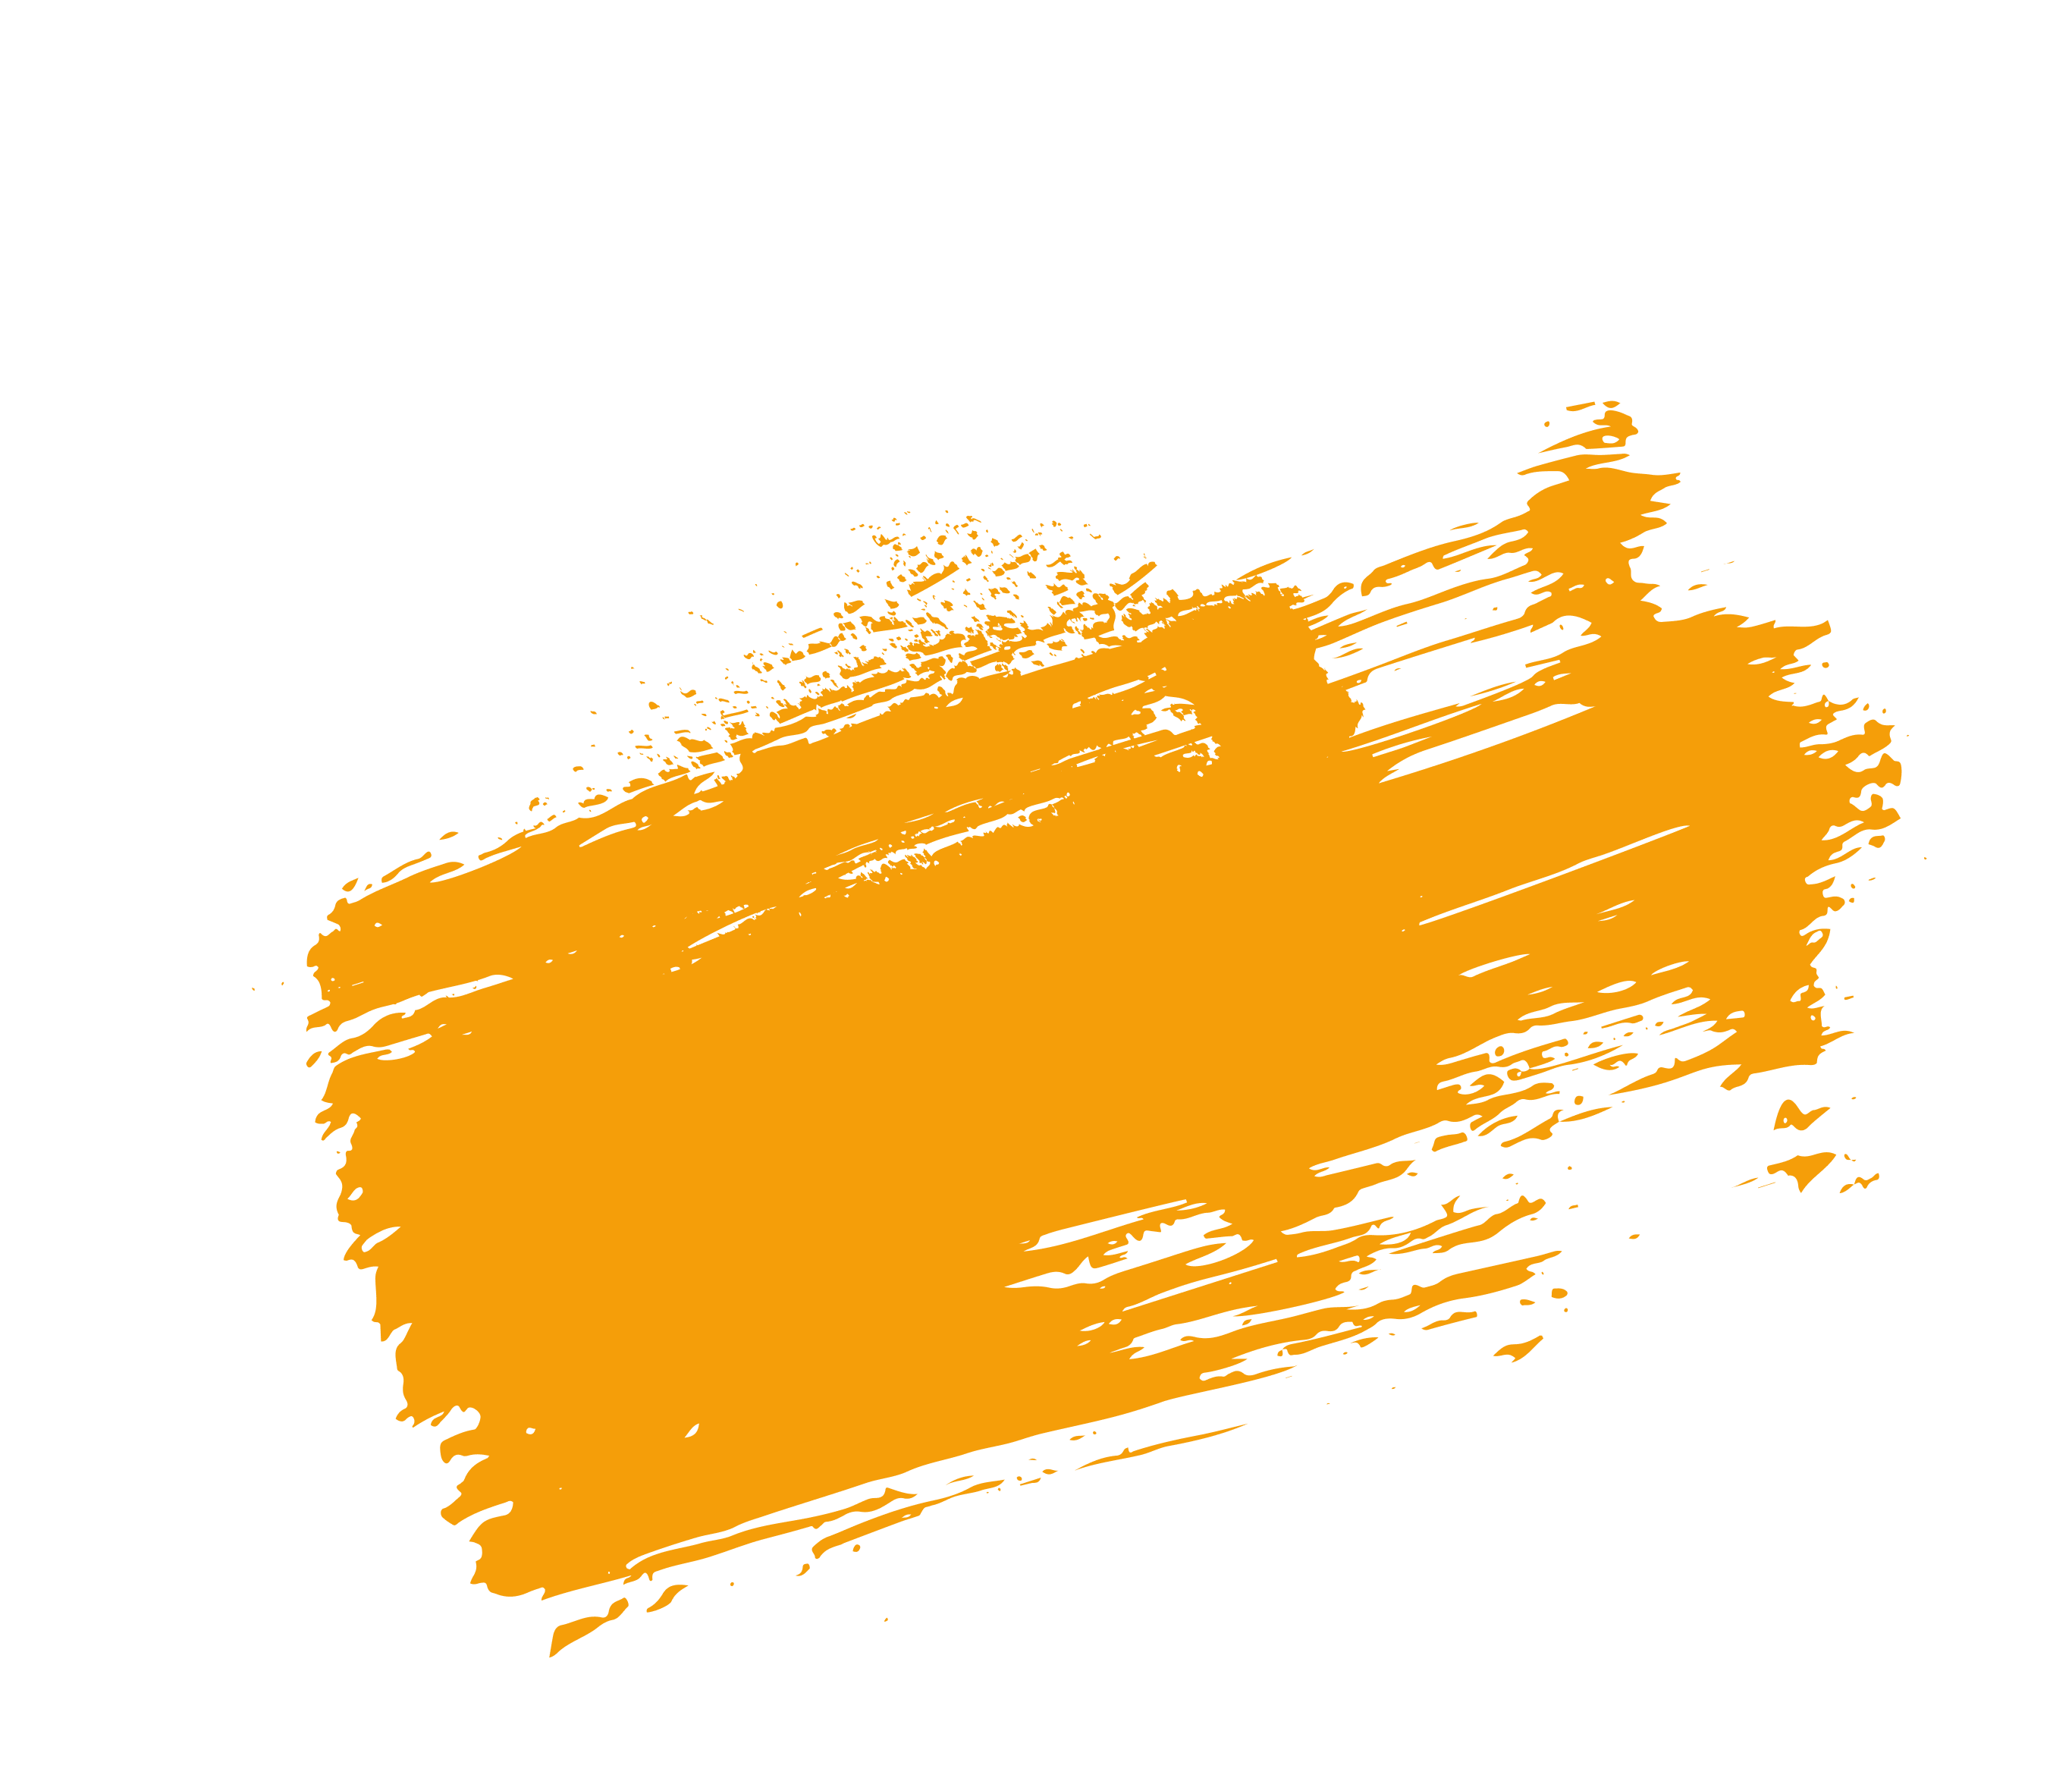 Orange grunge pattern for background